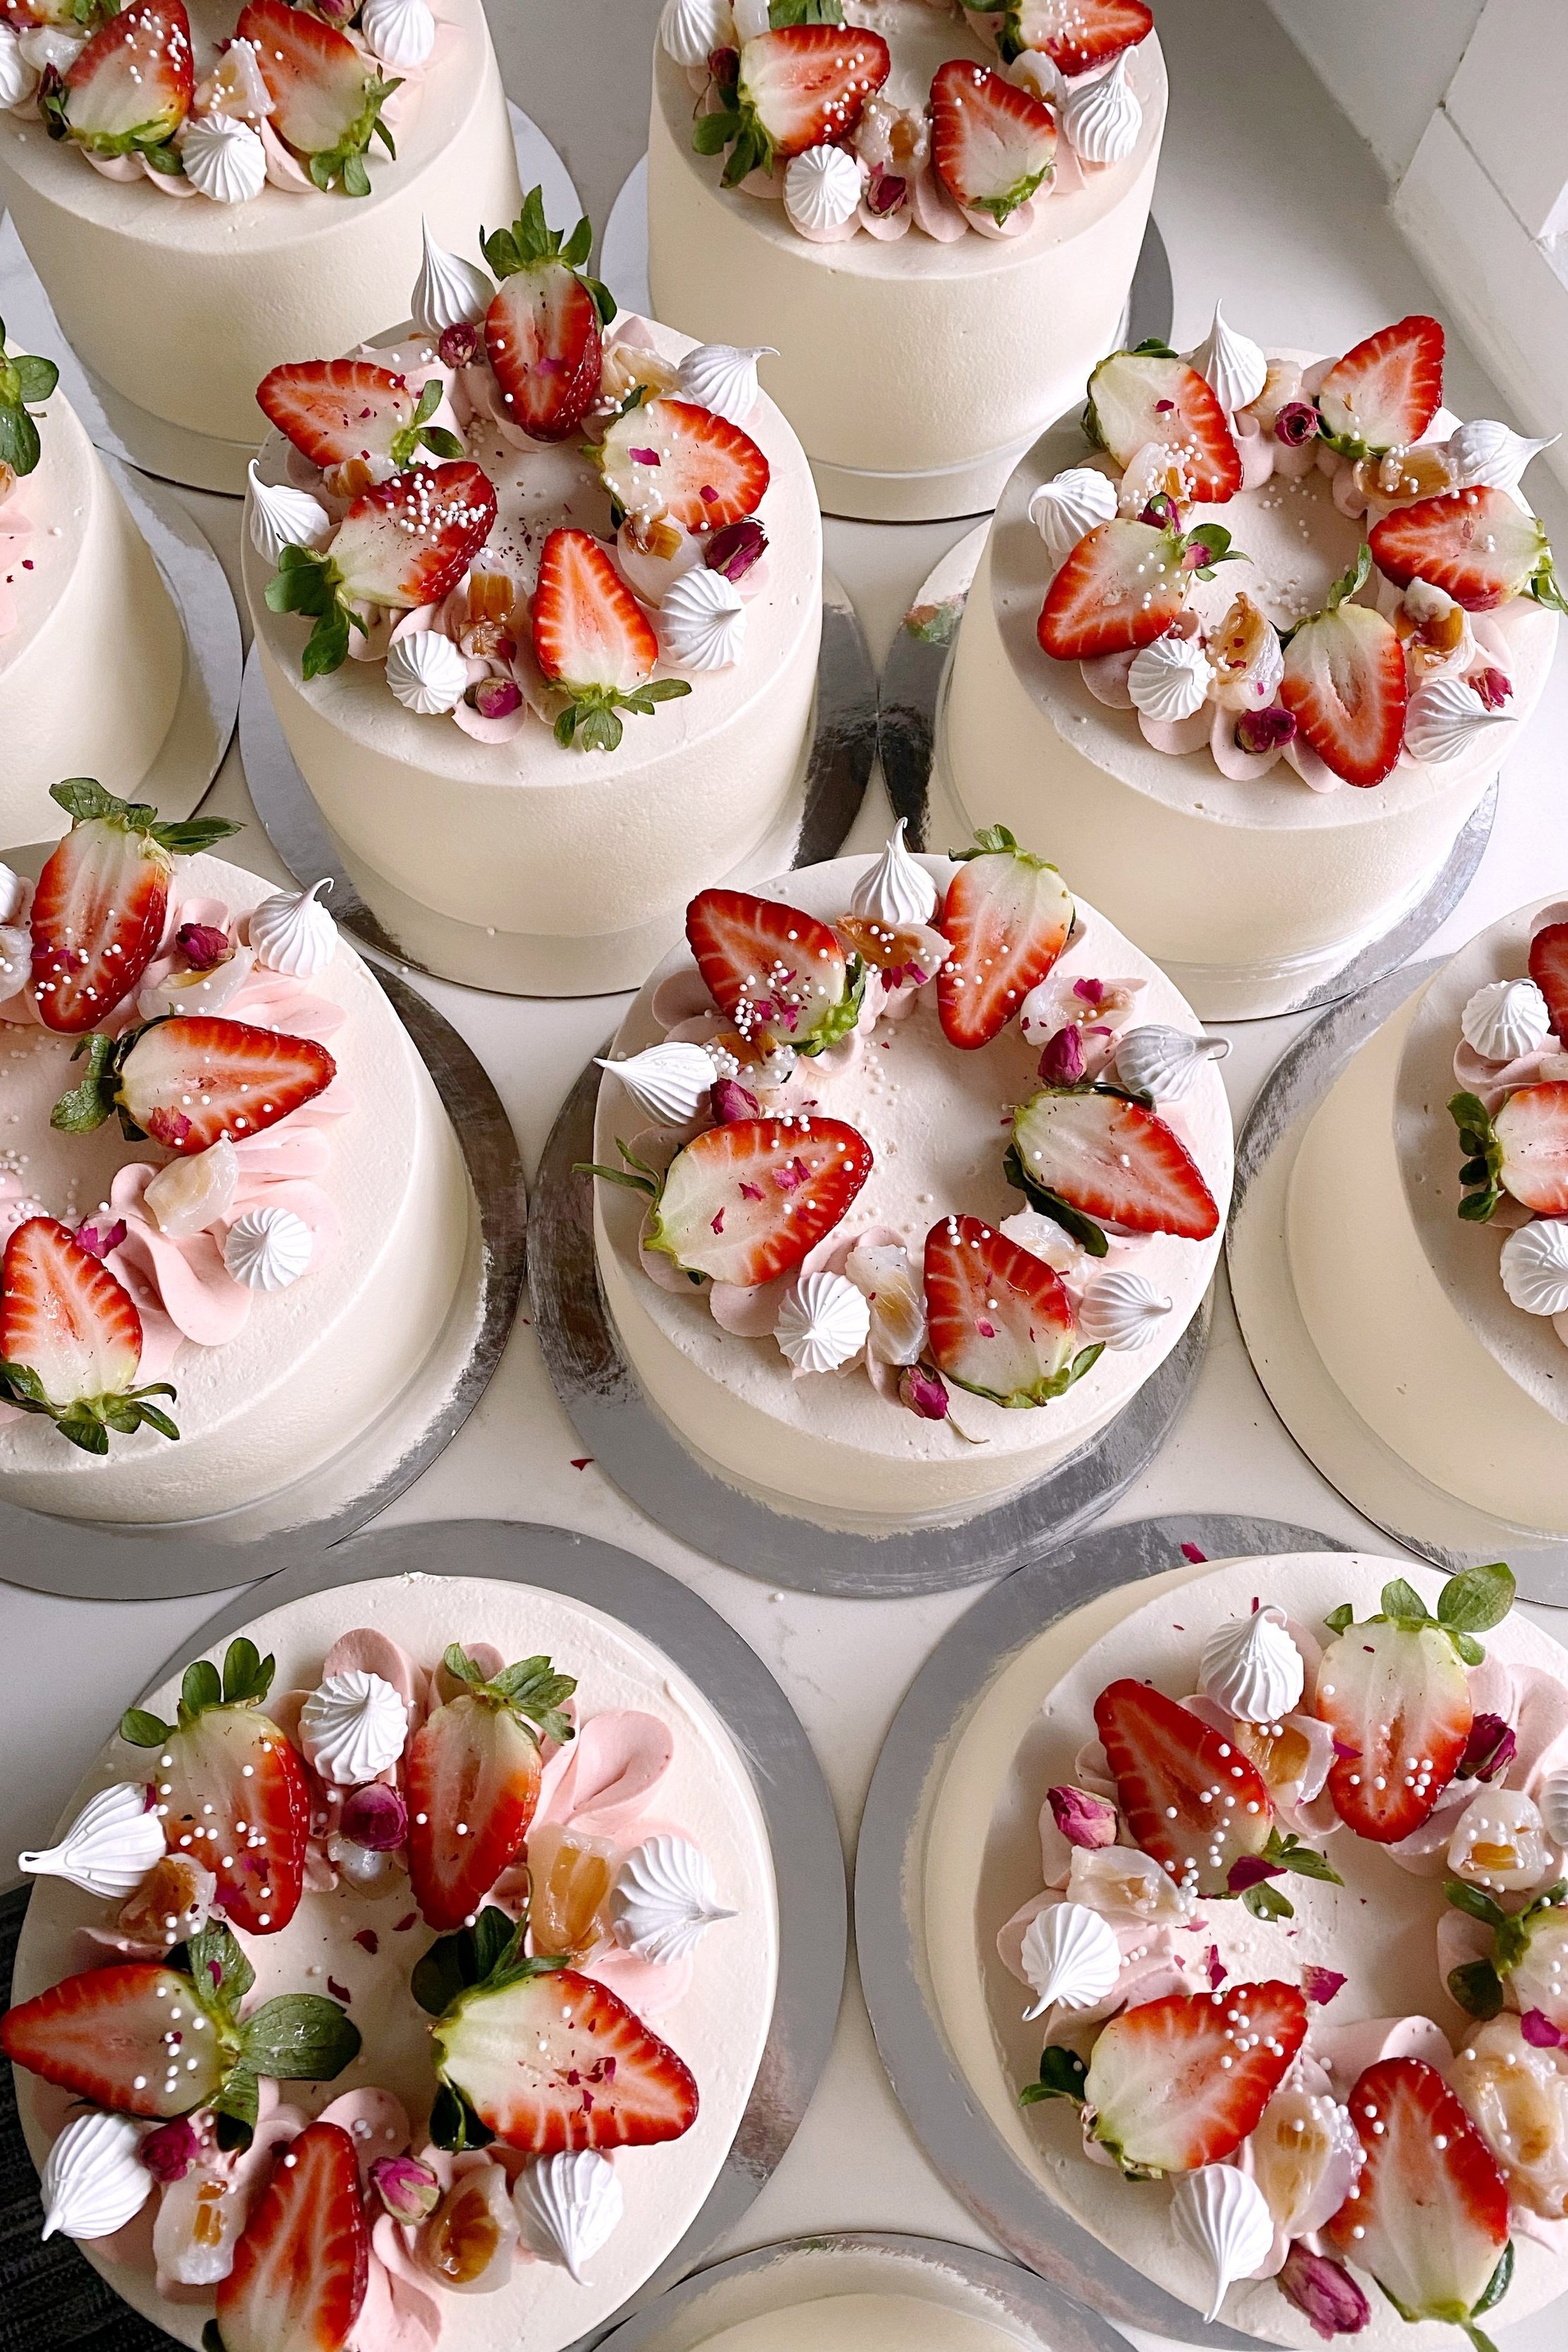 JY+Cake+Designs+strawberry+lychee+cake.jpg